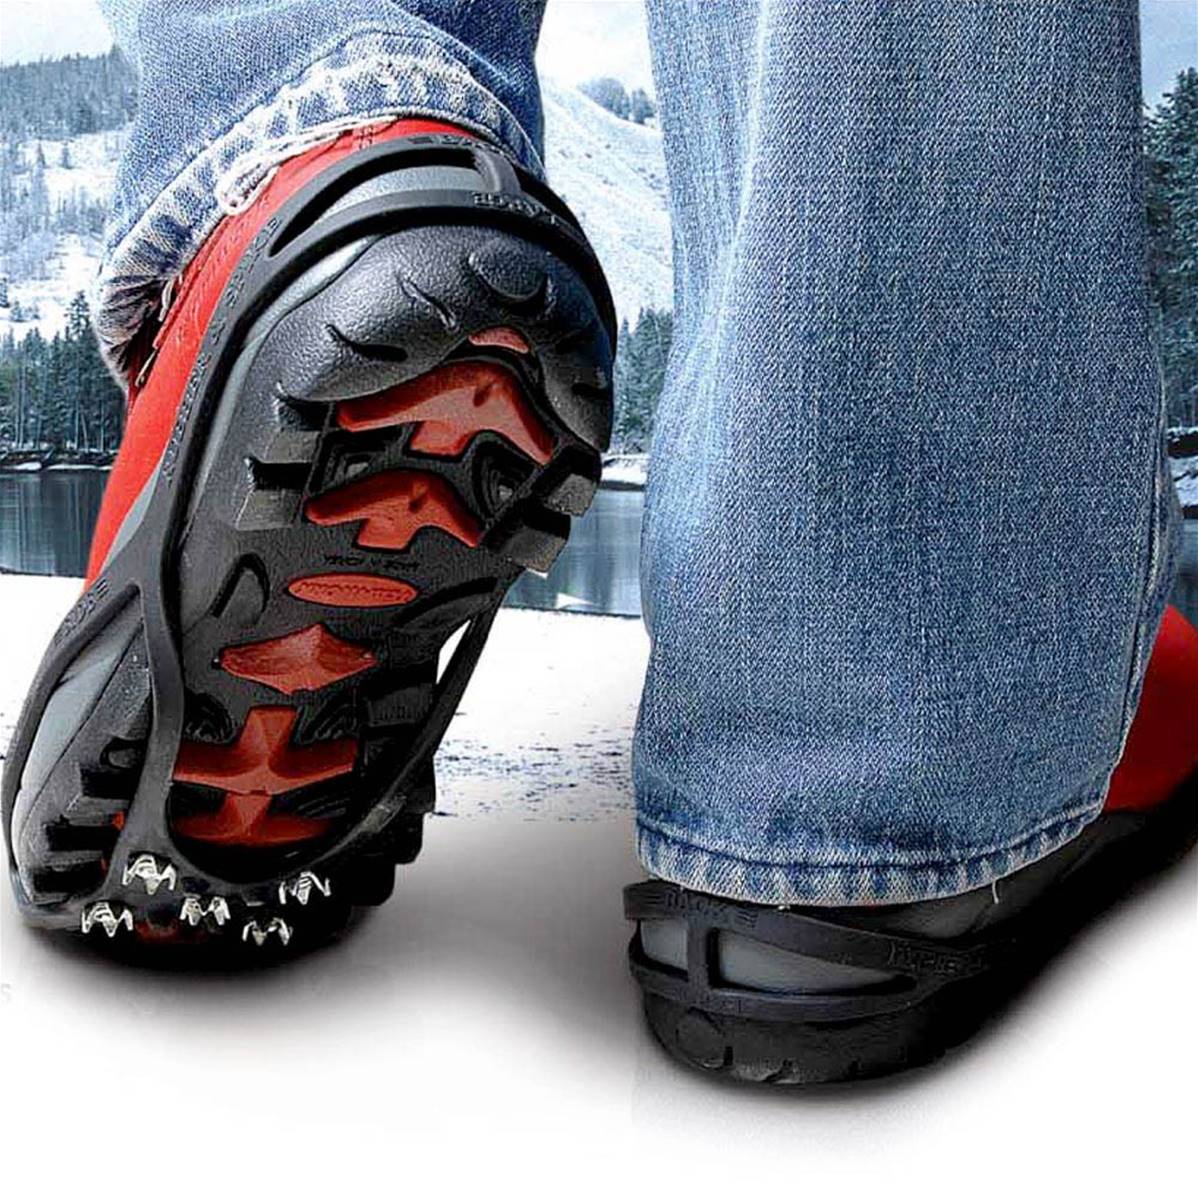 Chaines à neige pour chaussure, anti-glisse, crampons pour chaussures  anti-verglas